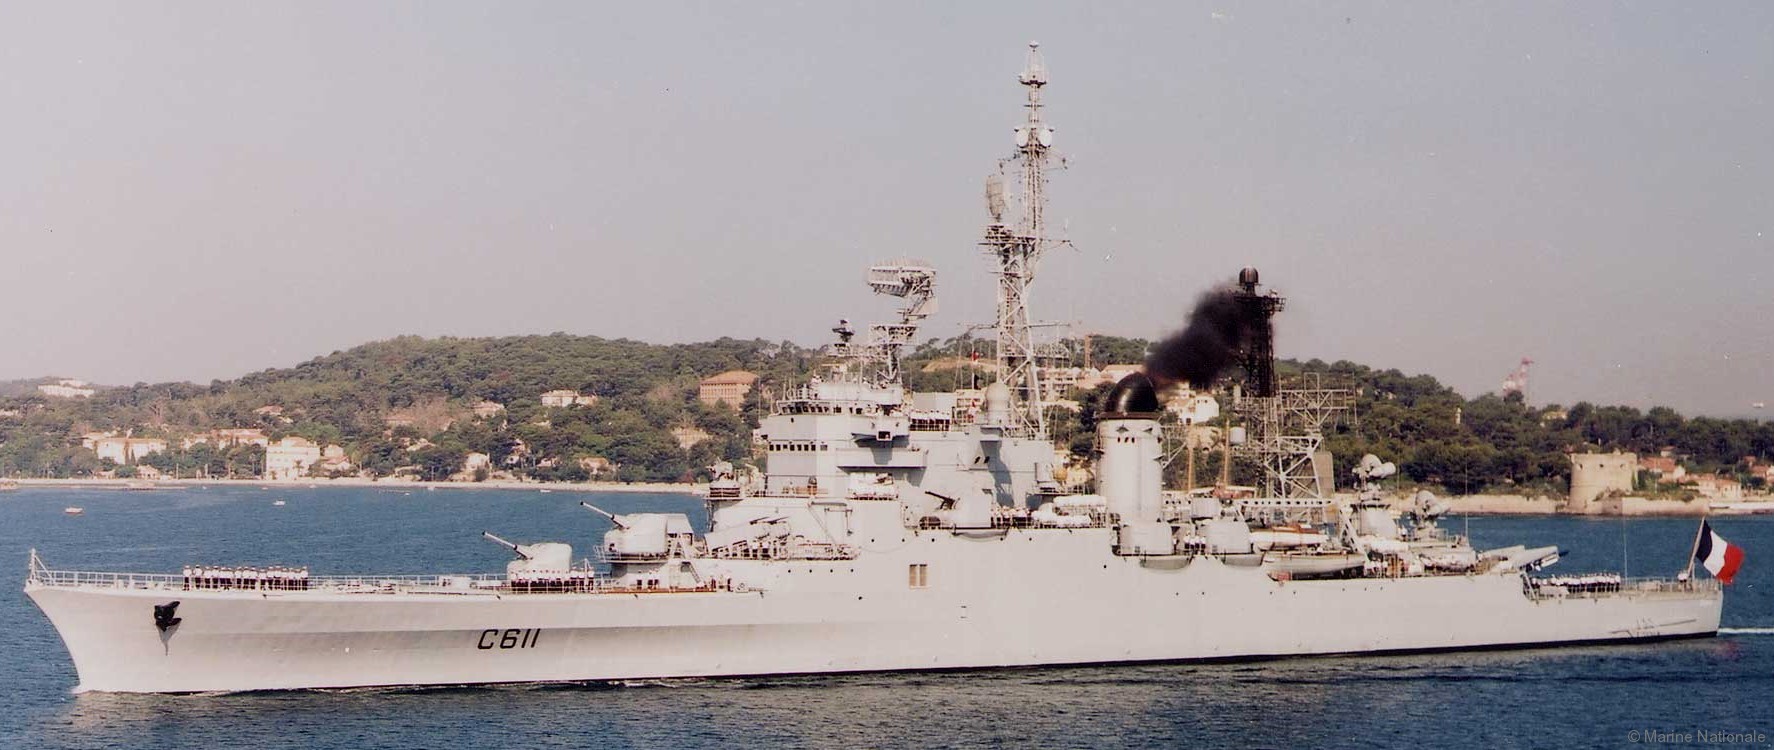 c-611 fs colbert cruiser croiseur masurca sam missile mm38 exocet ssm french navy marine nationale dcan brest 02x